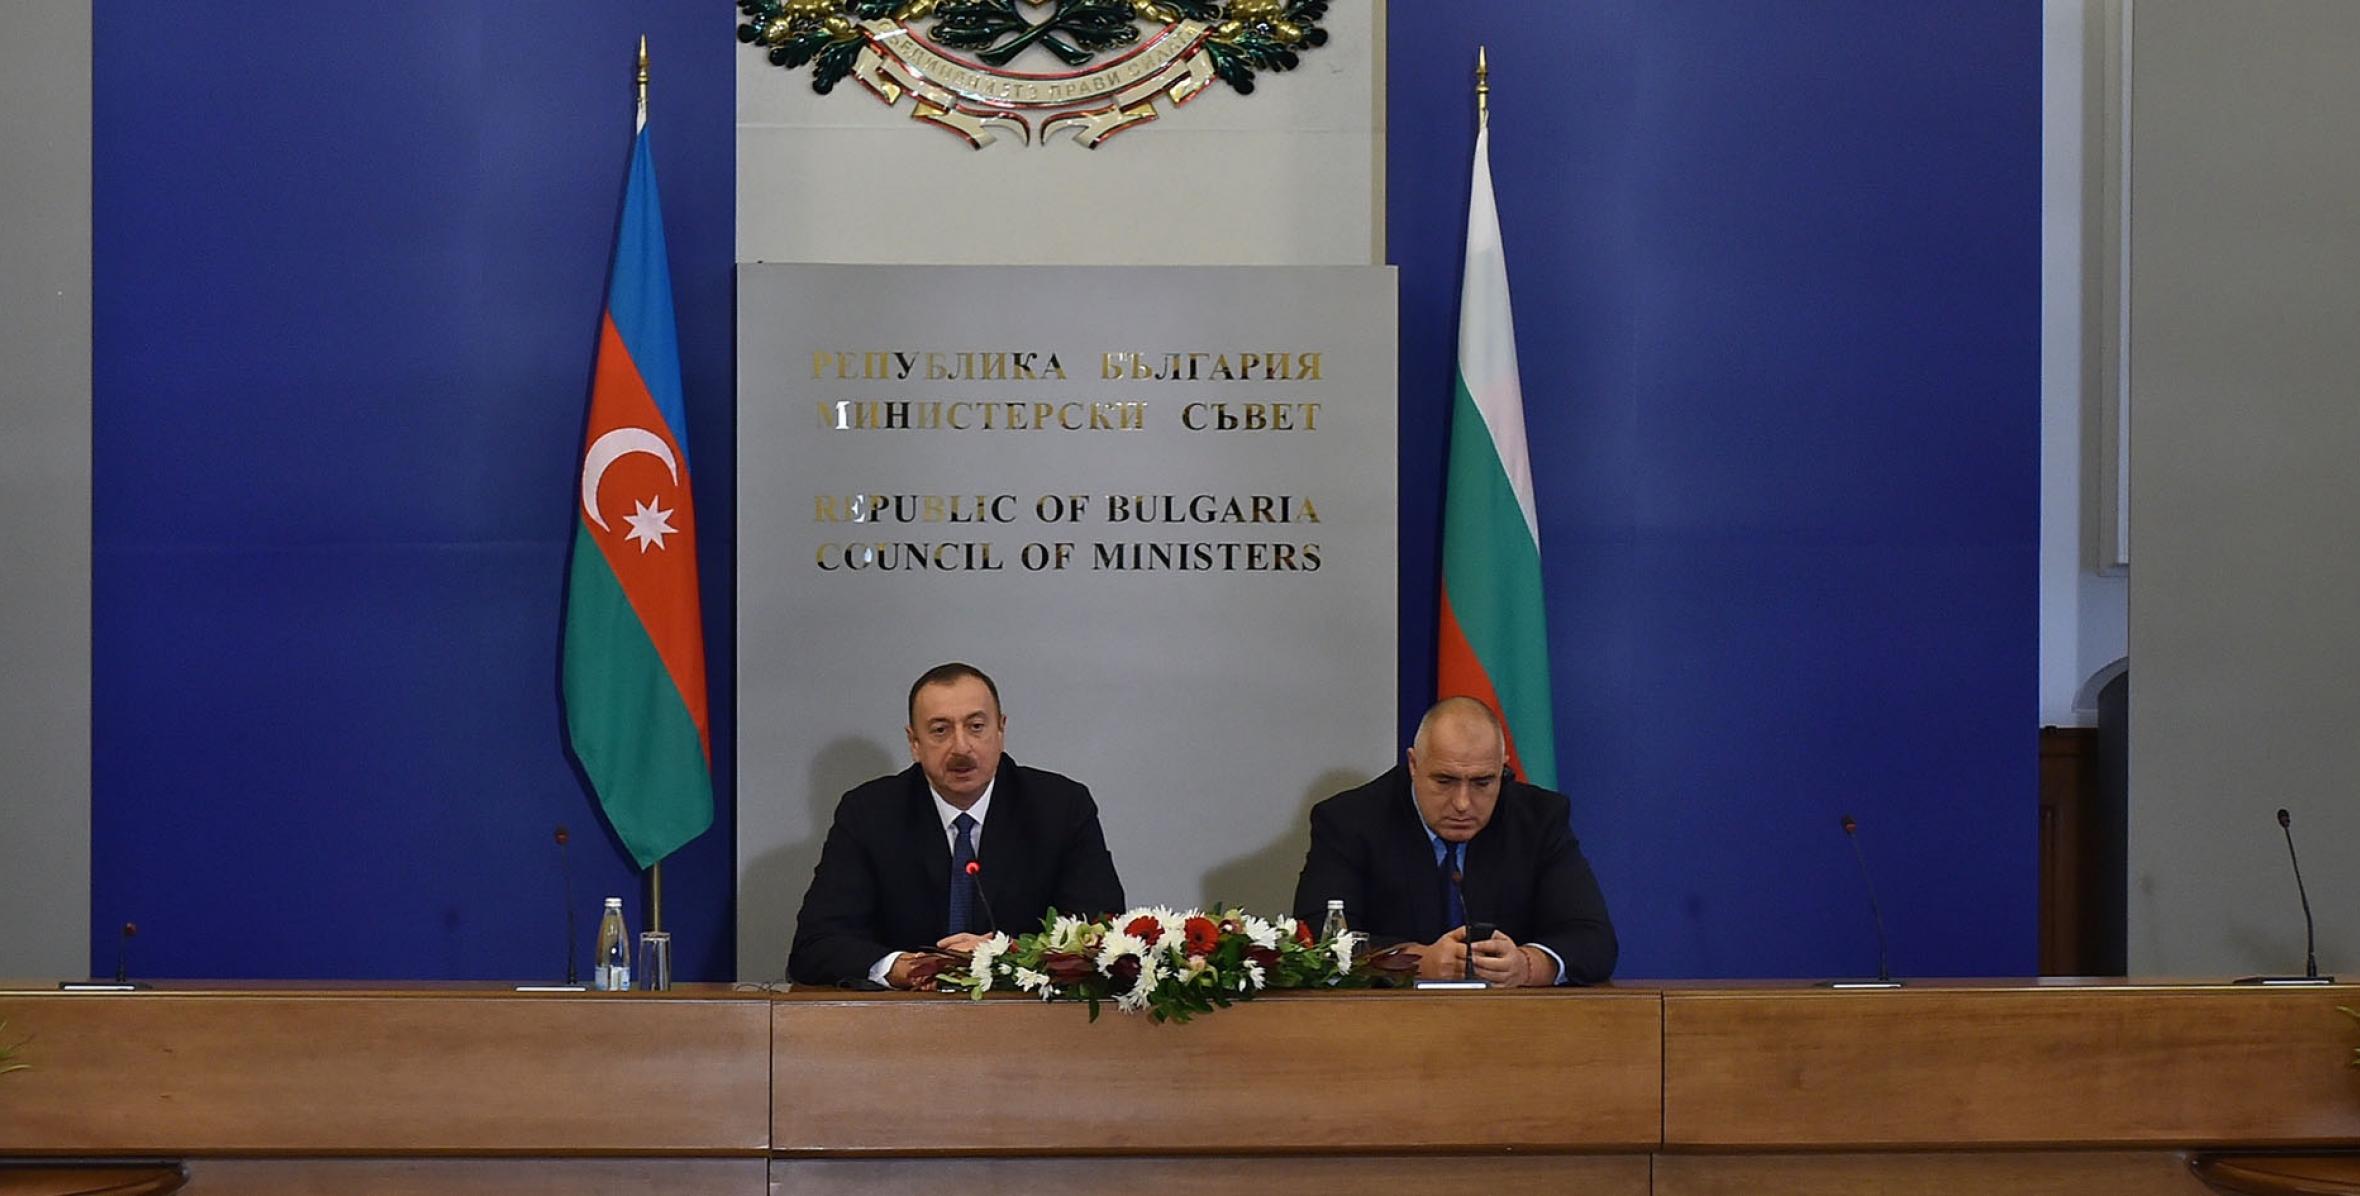 Ilham Aliyev and Bulgarian Premier Boyko Borisov held a joint press conference